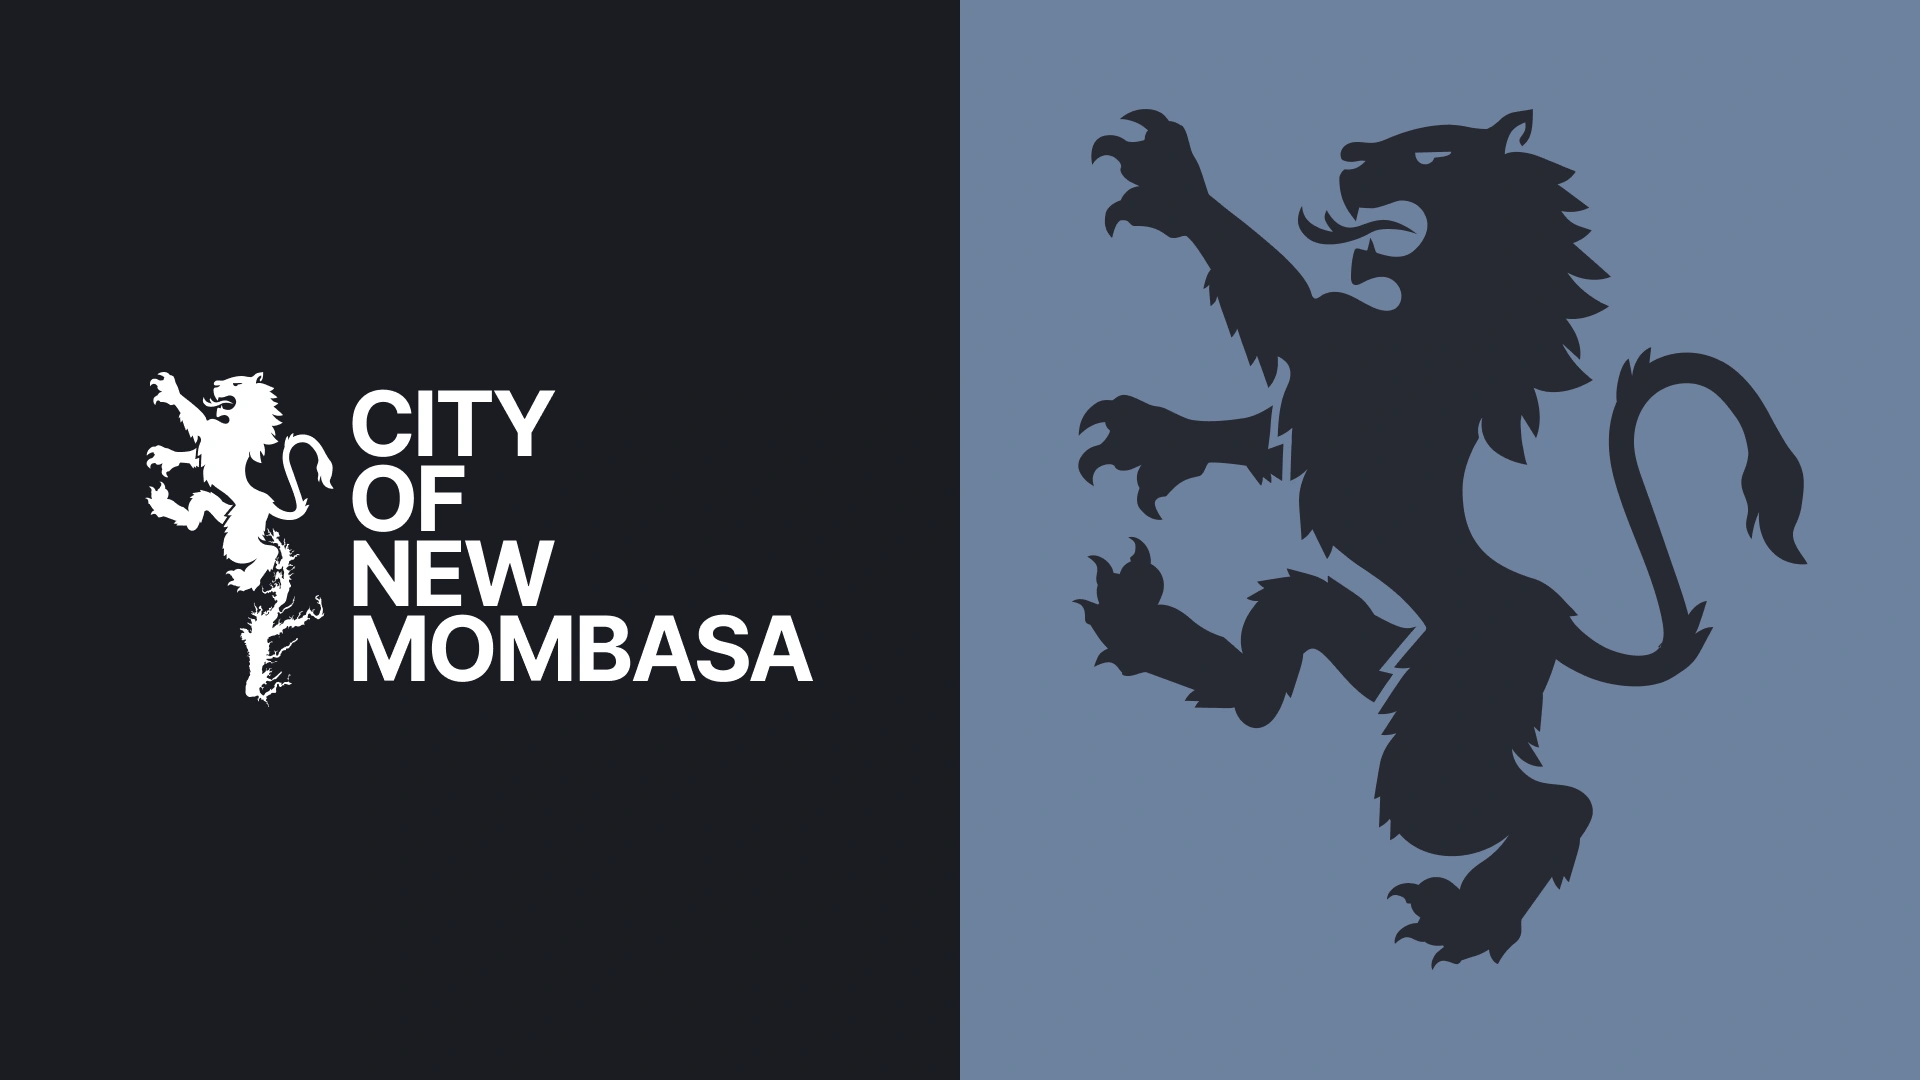 I01 New Mombasa branding